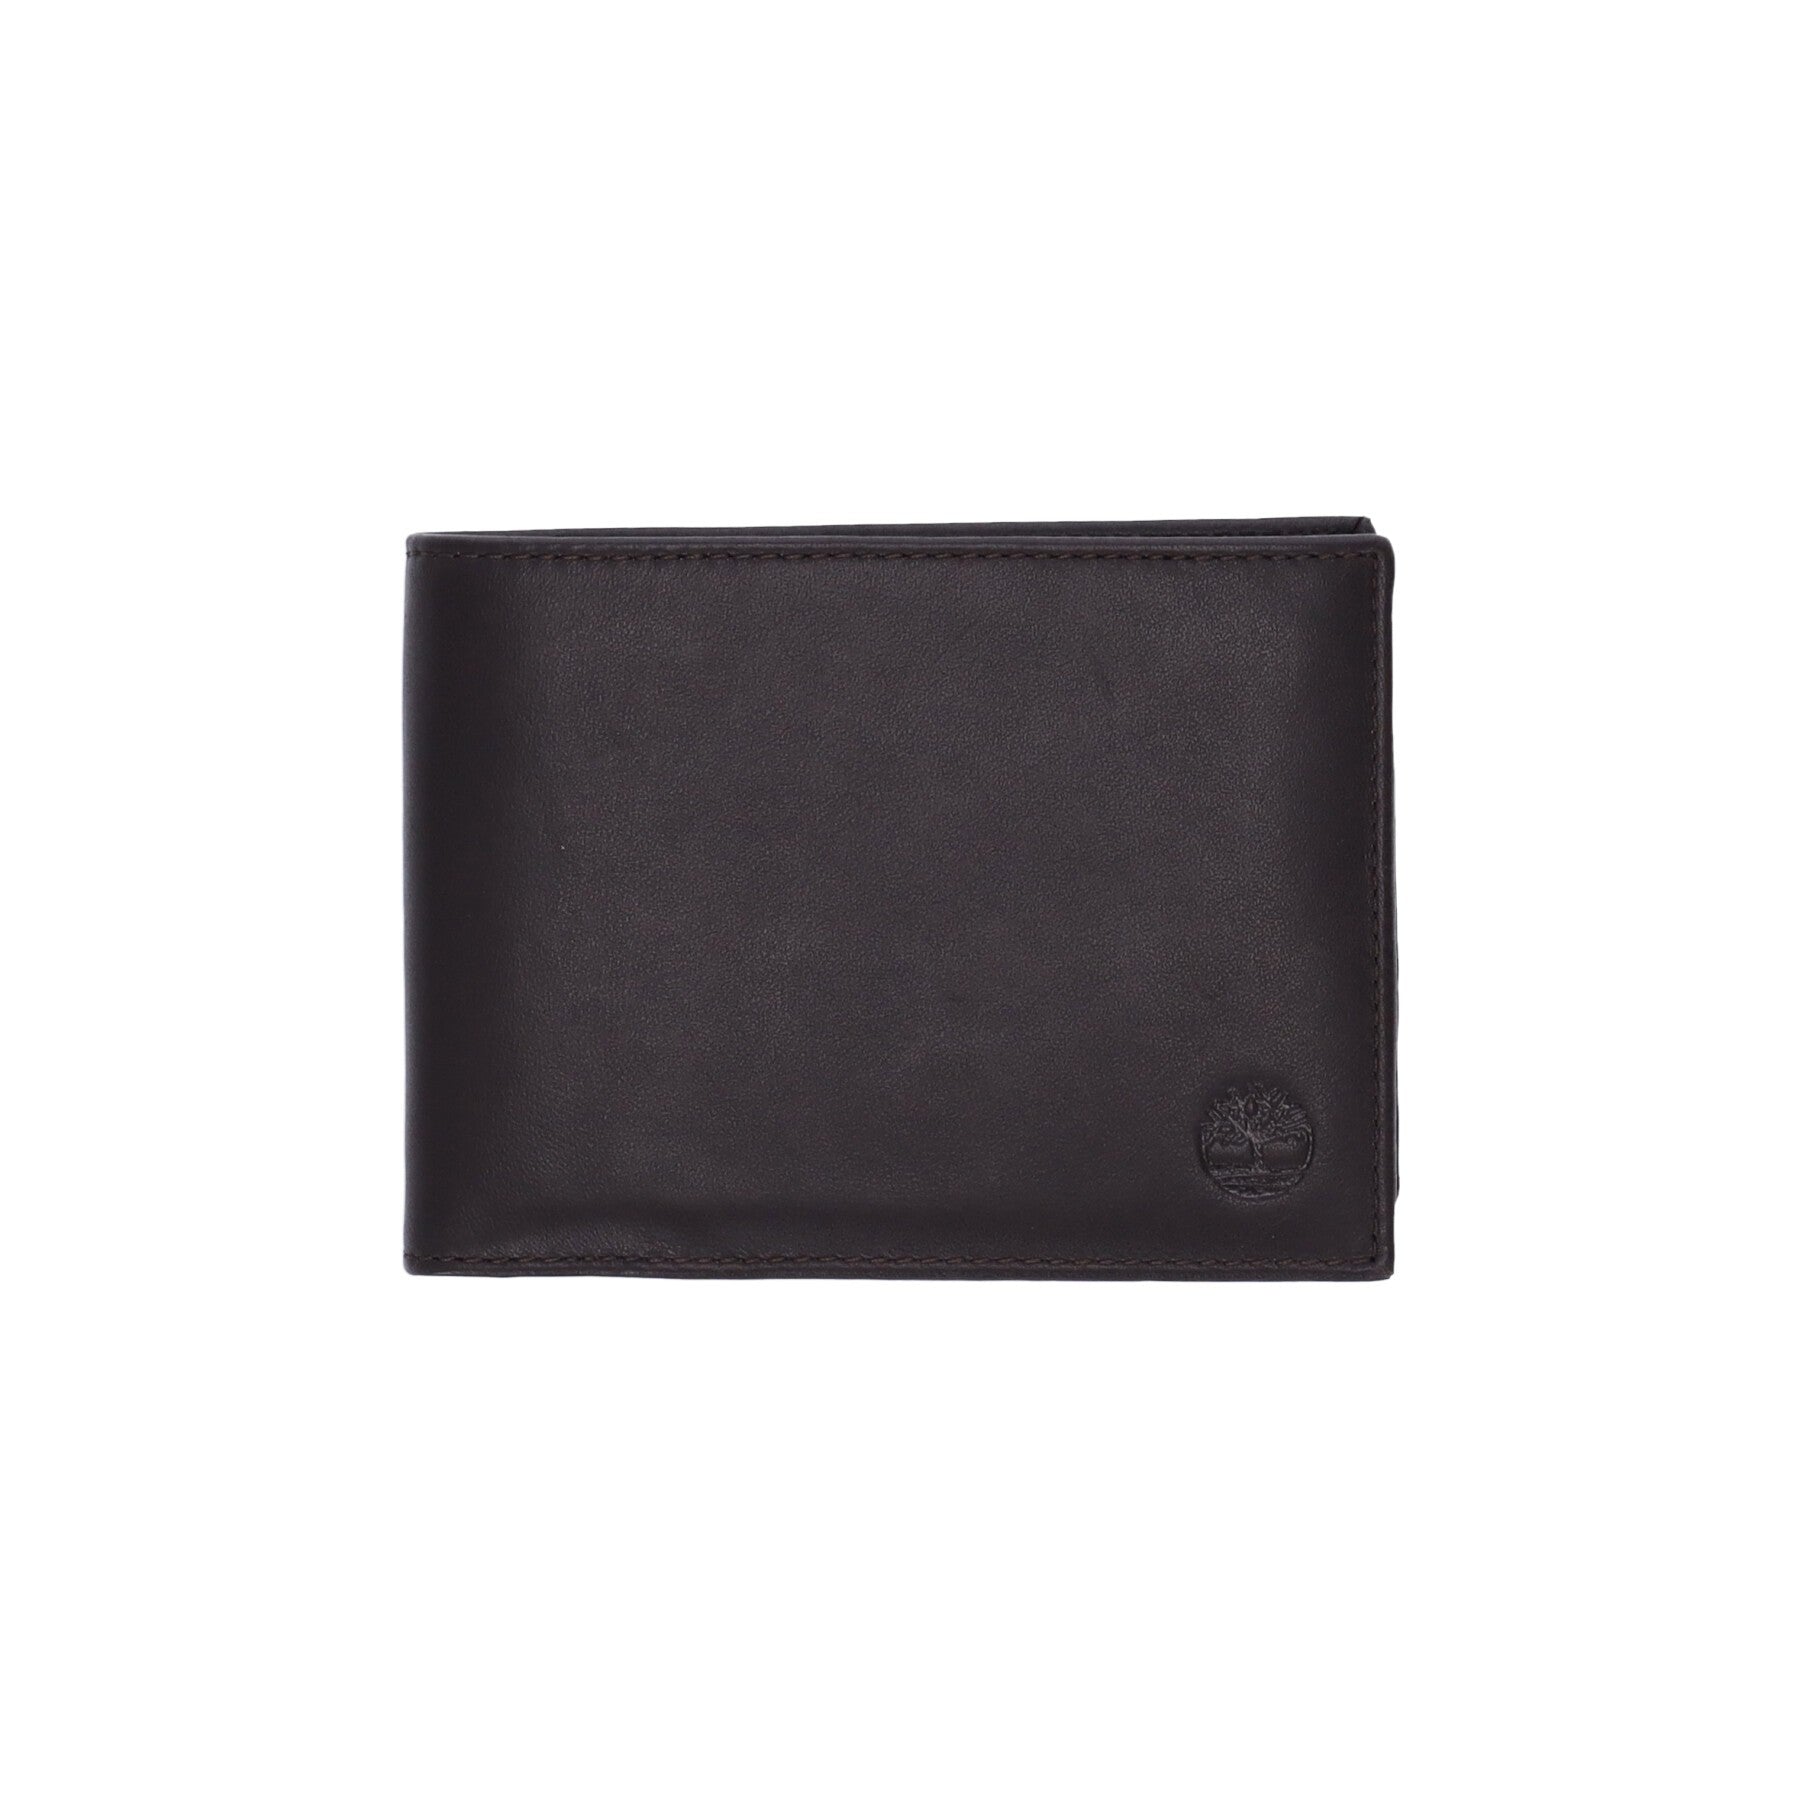 Timberland, Portafoglio Uomo Trifold Wallet With Coin Pocket, Dark Brown